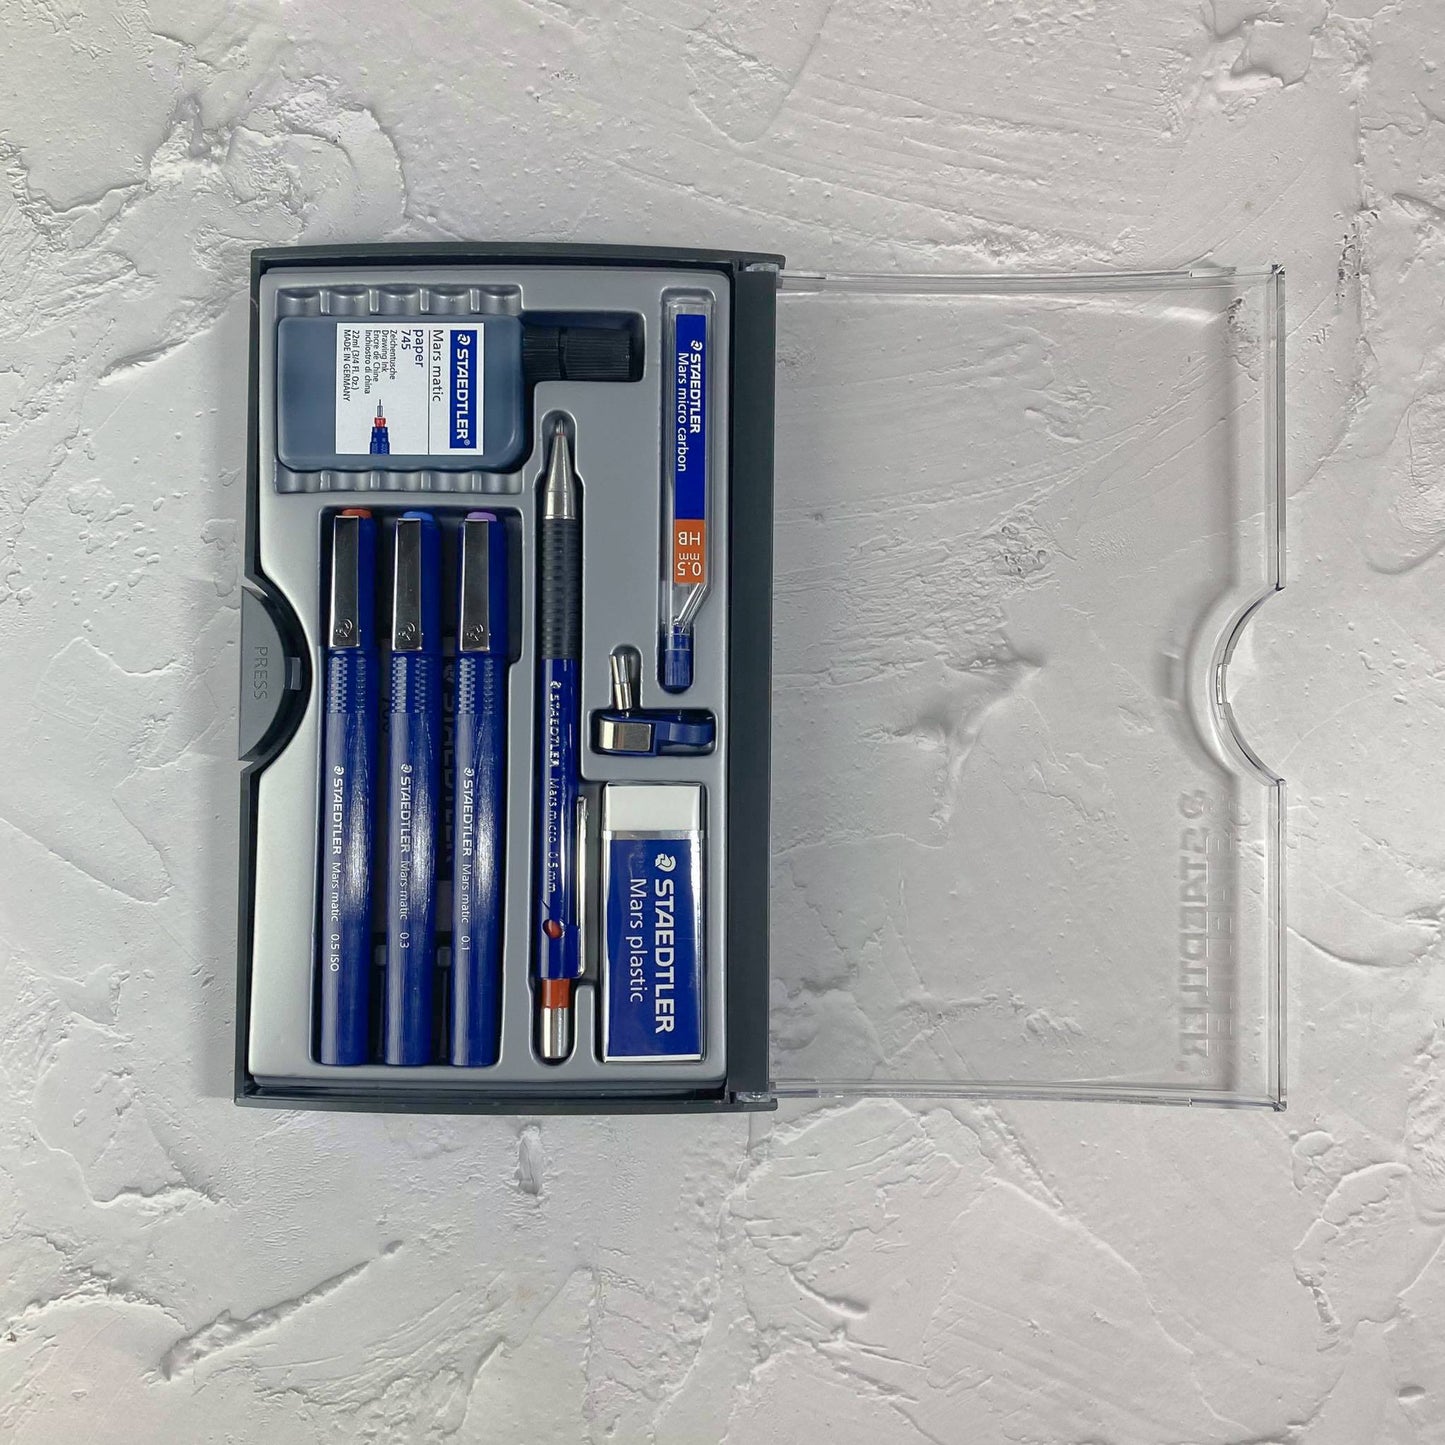 Staedtler Technical Pen Complete College Set 0.1, 0.3, 0.5mm